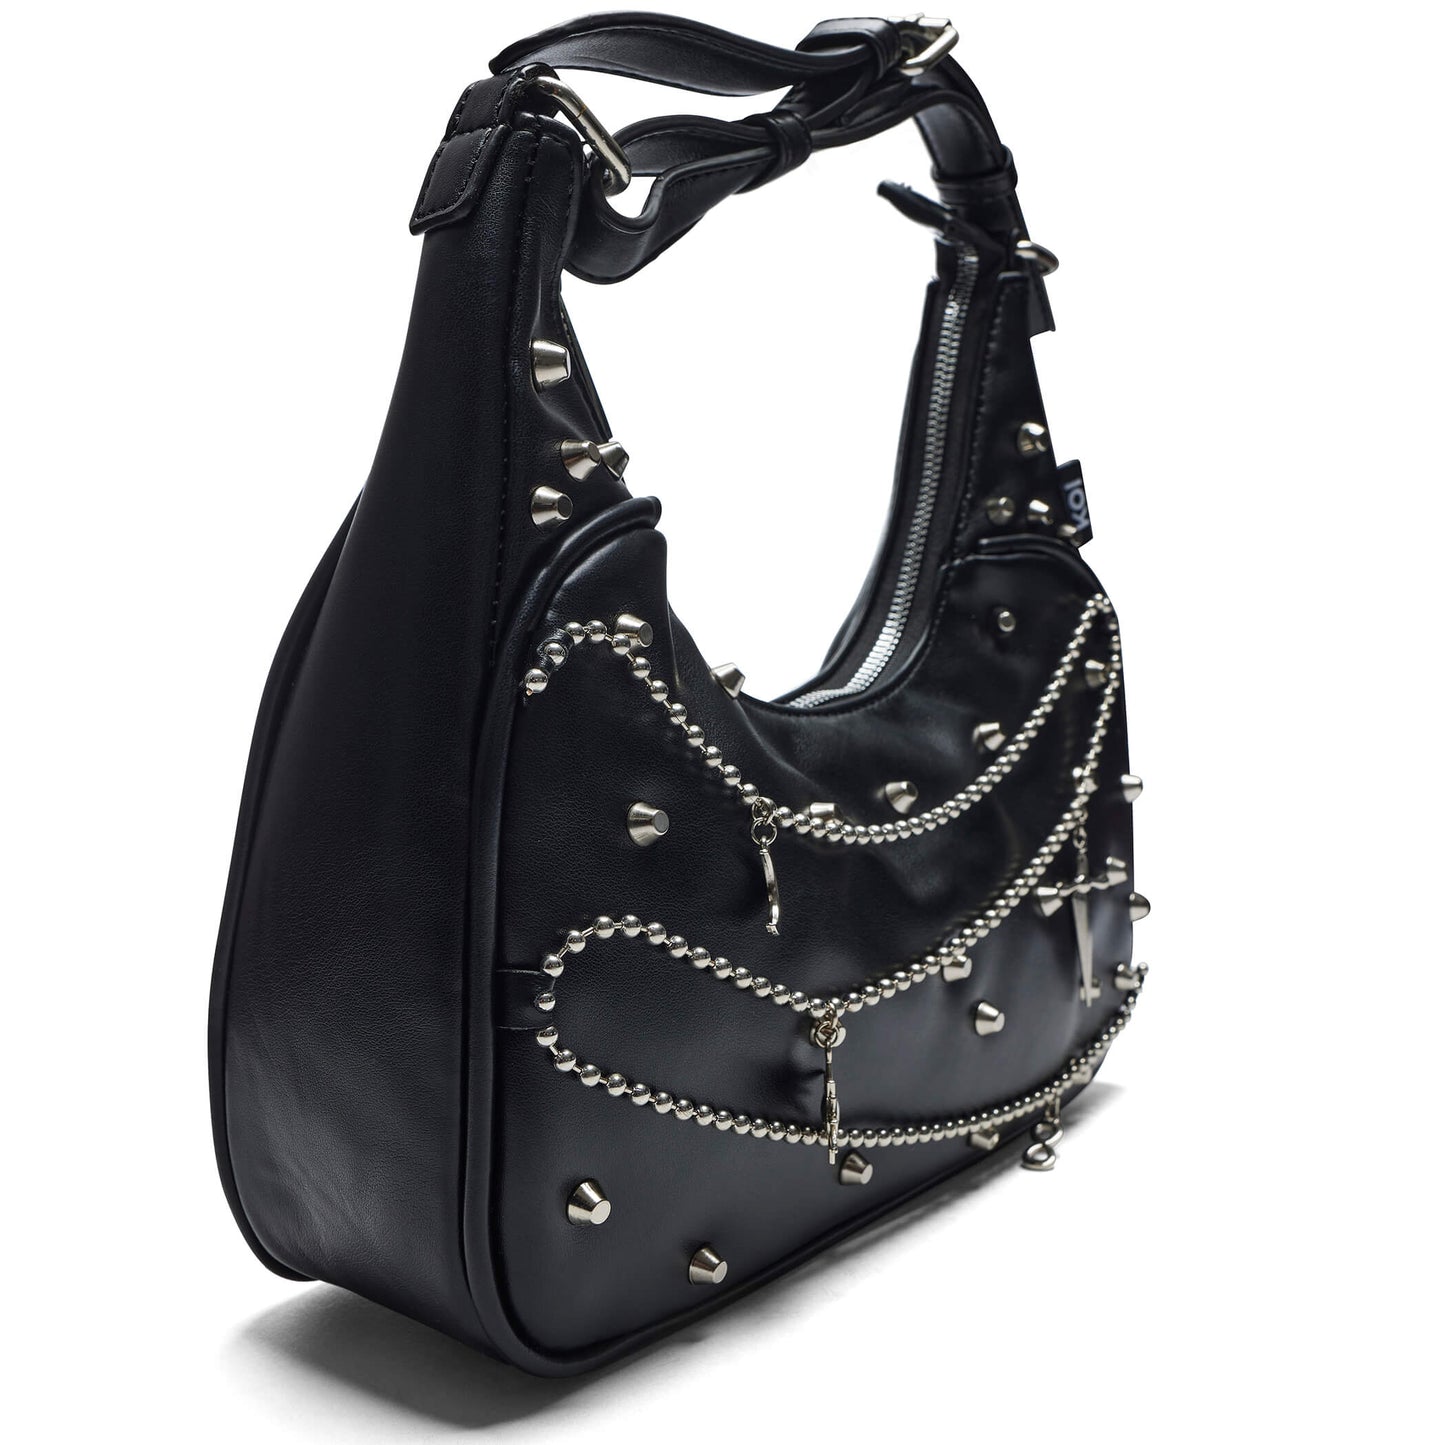 Jinx Mystic Charm Black Shoulder Bag - Accessories - KOI Footwear - OS - Three-Quarter View